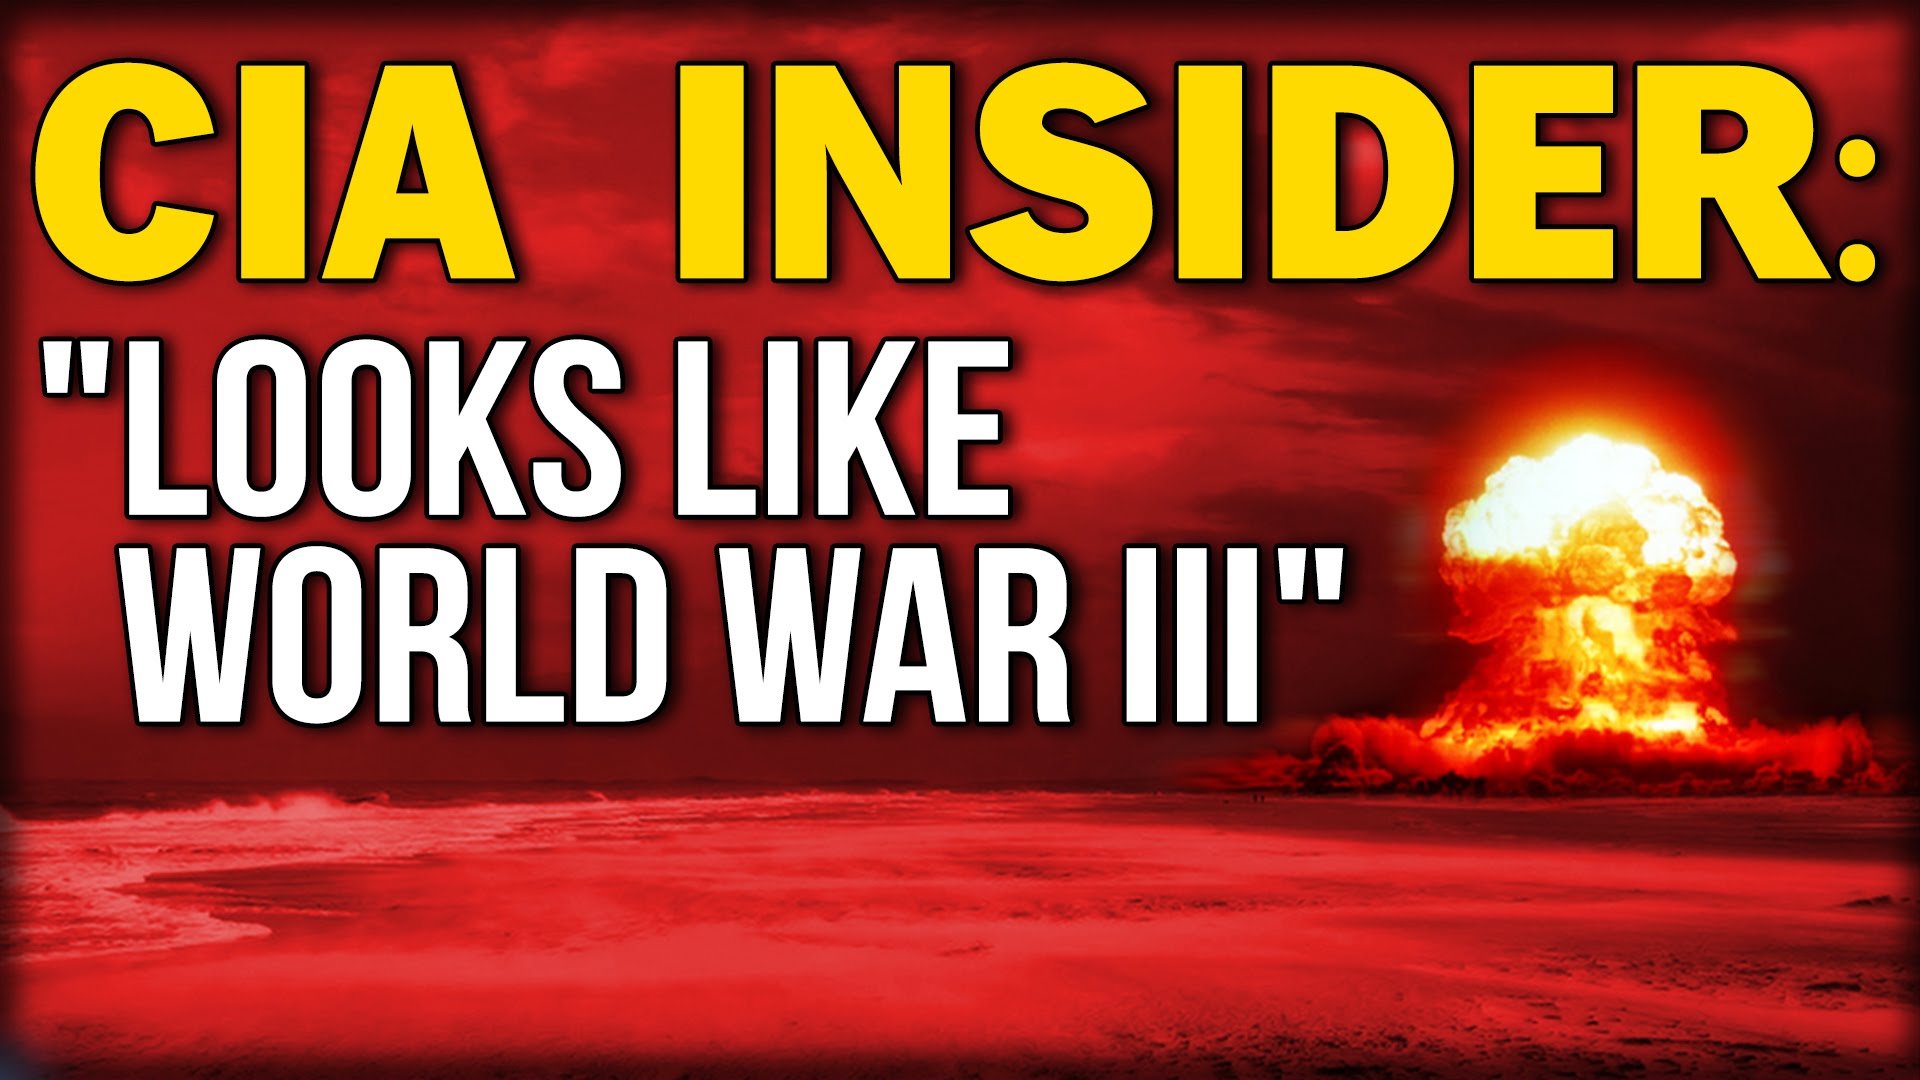 CIA INSIDER: “LOOKS LIKE WORLD WAR III”